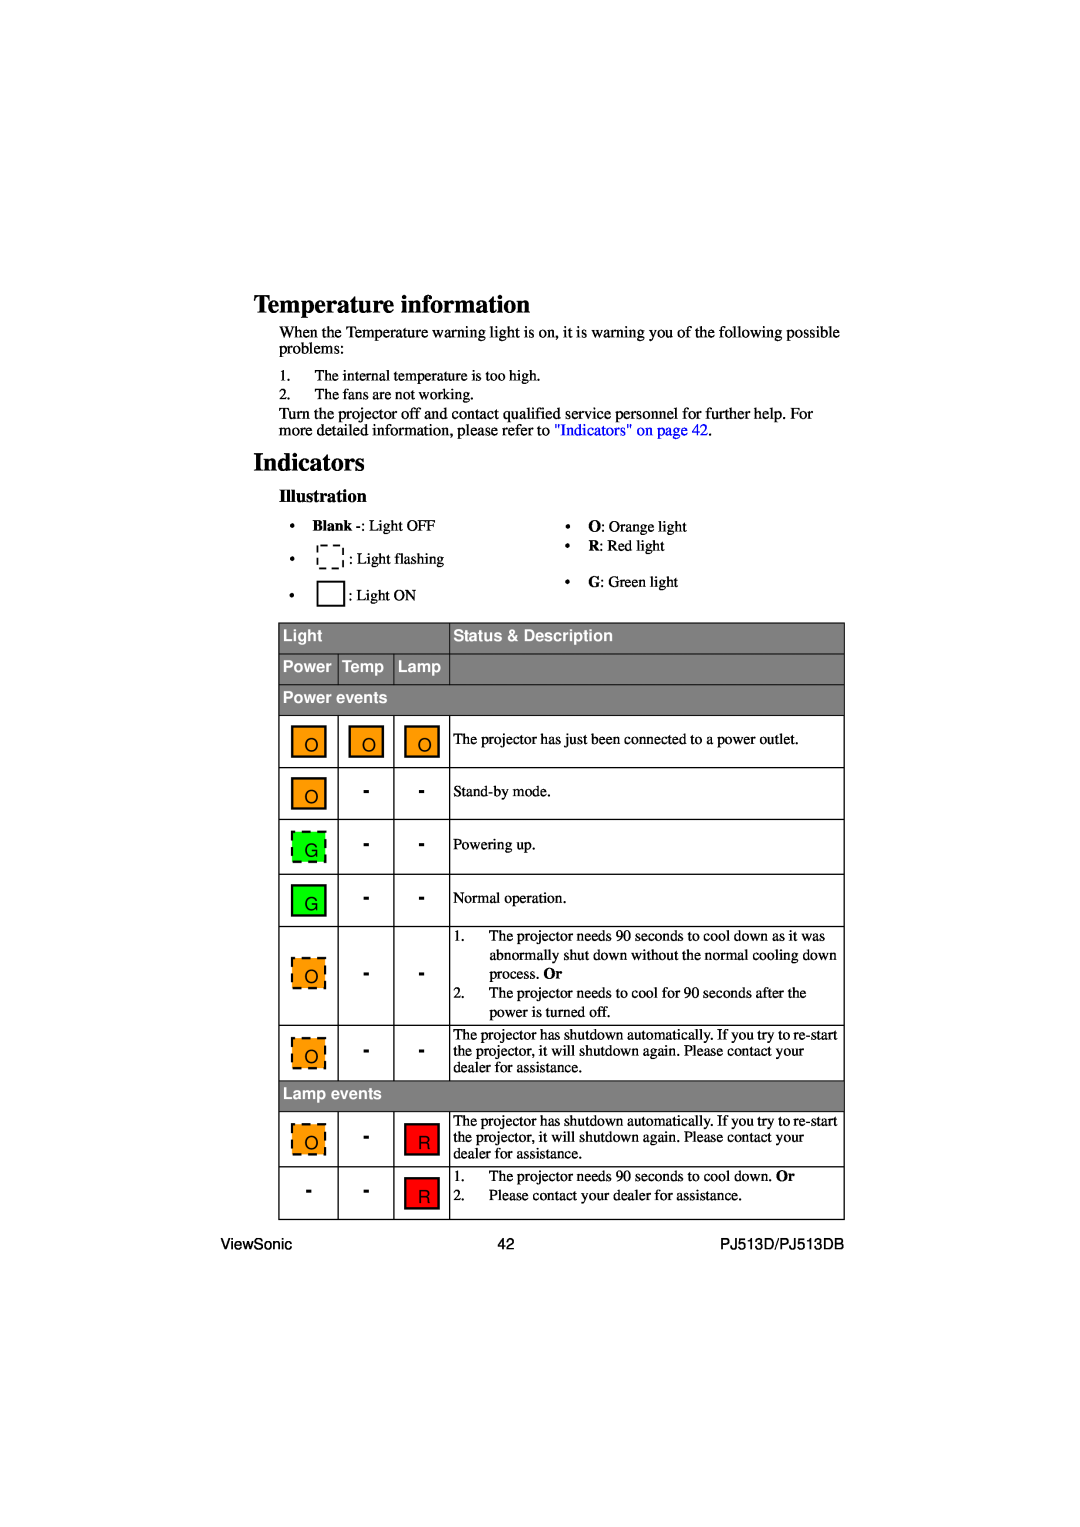 ViewSonic PJ513DB warranty Temperature information, Indicators, Illustration 